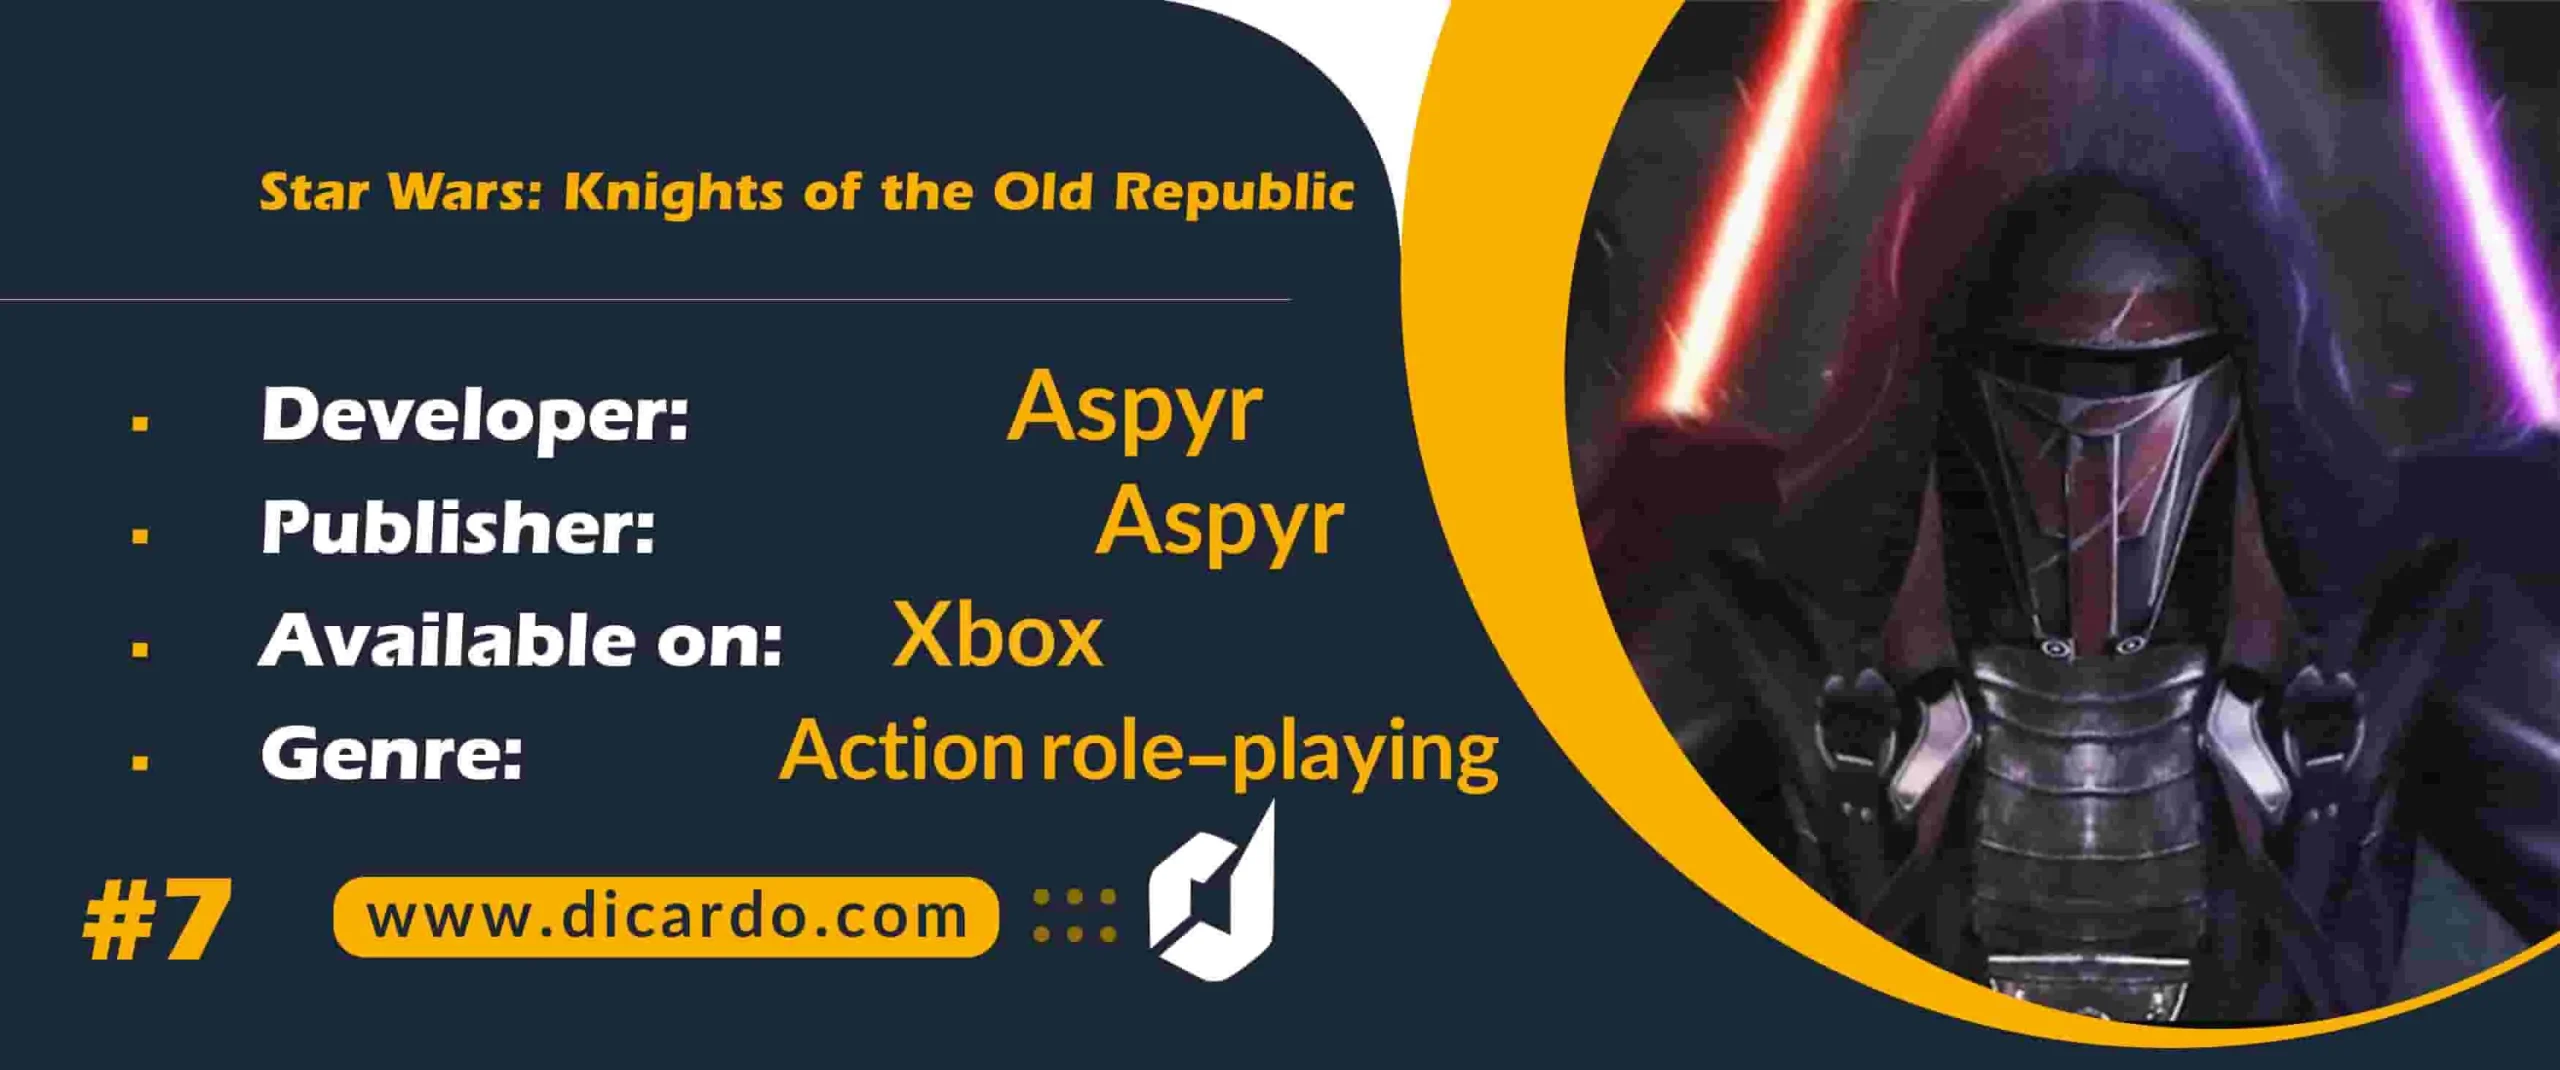 #7 استار وارز نایتز آو د اولد ریپابلیک Star Wars: Knights of the Old Republic